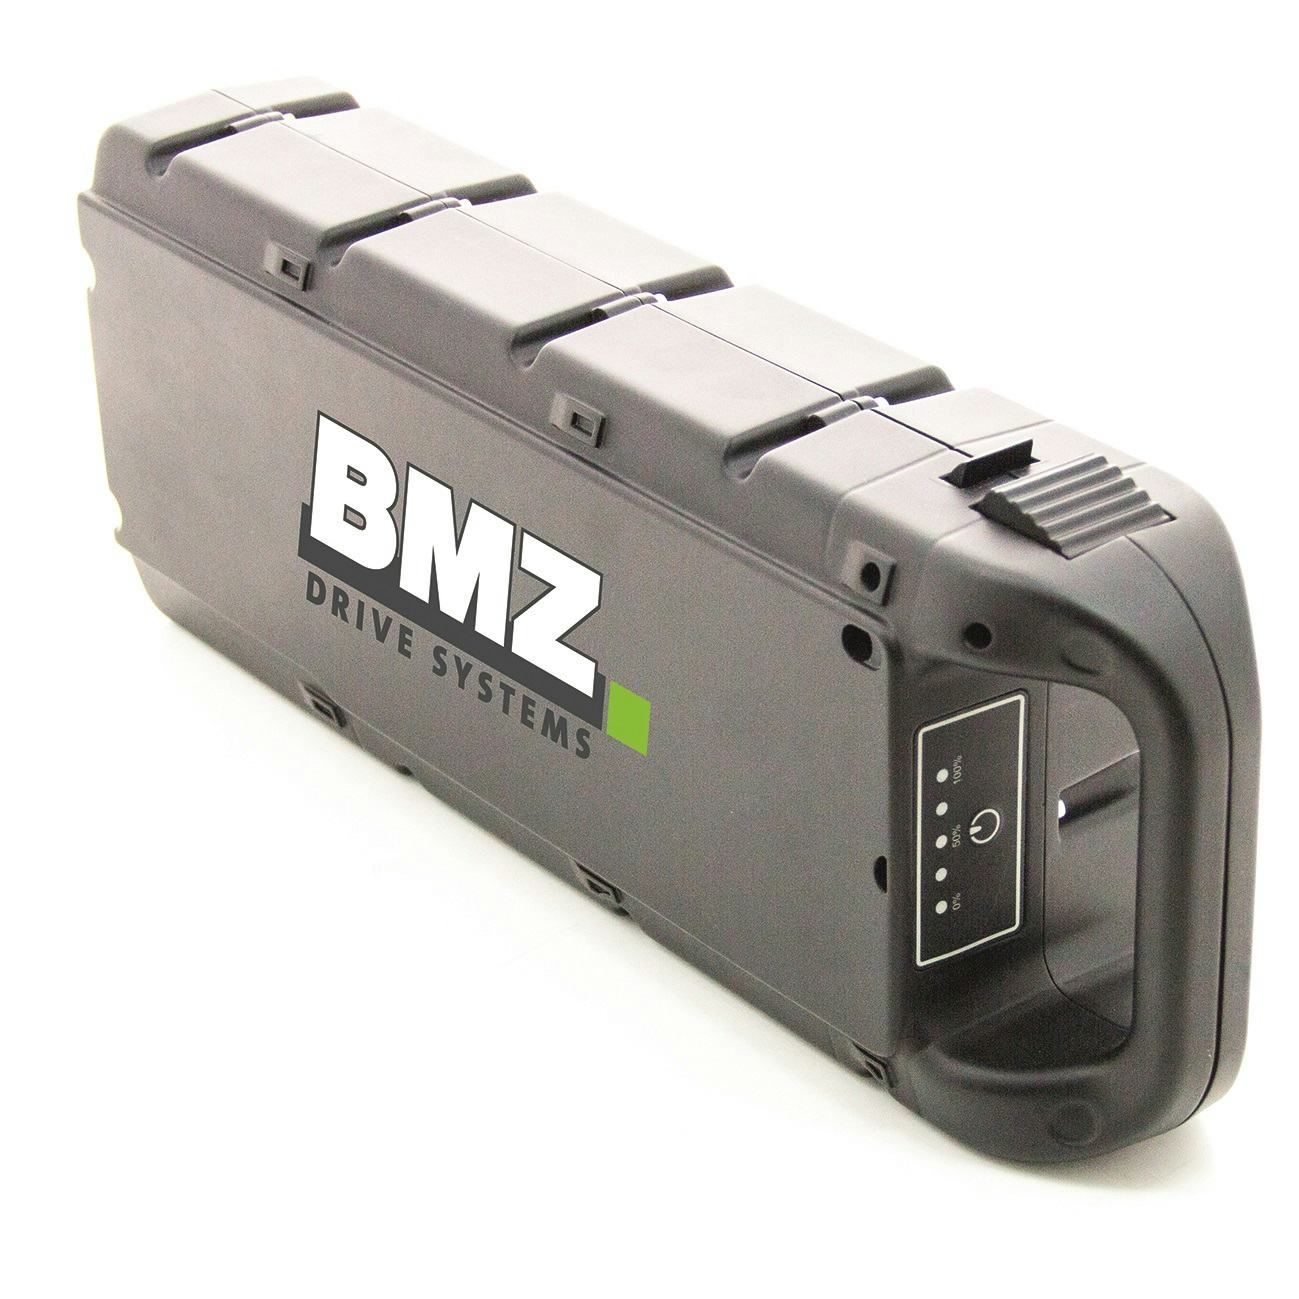 BMZ Presents Trendy Battery Designs at China Cycle